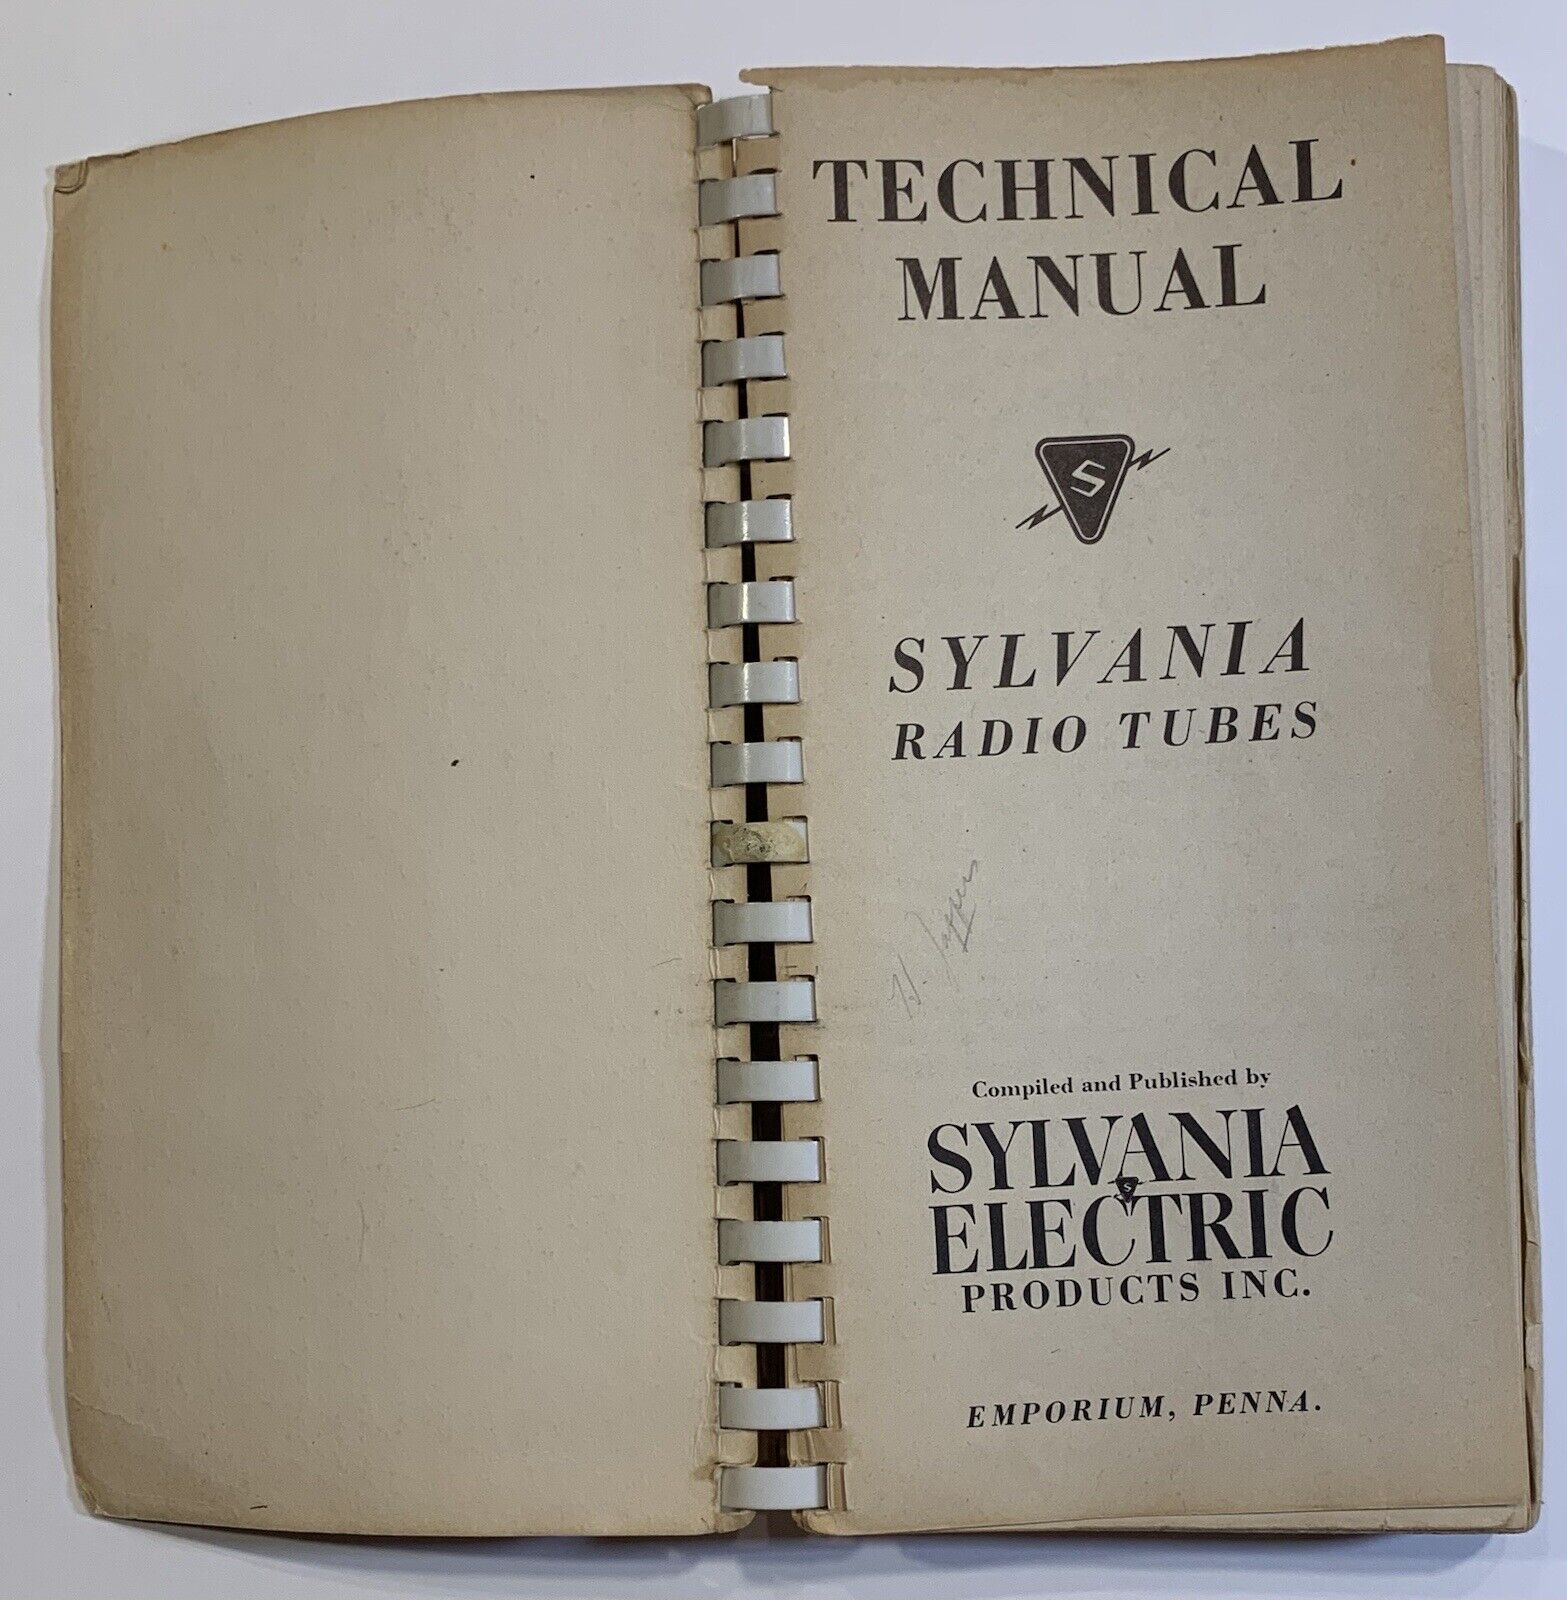 VINTAGE: 1949 TECHNICAL MANUAL - Sylvania Radio Tubes - Approx 400pgs